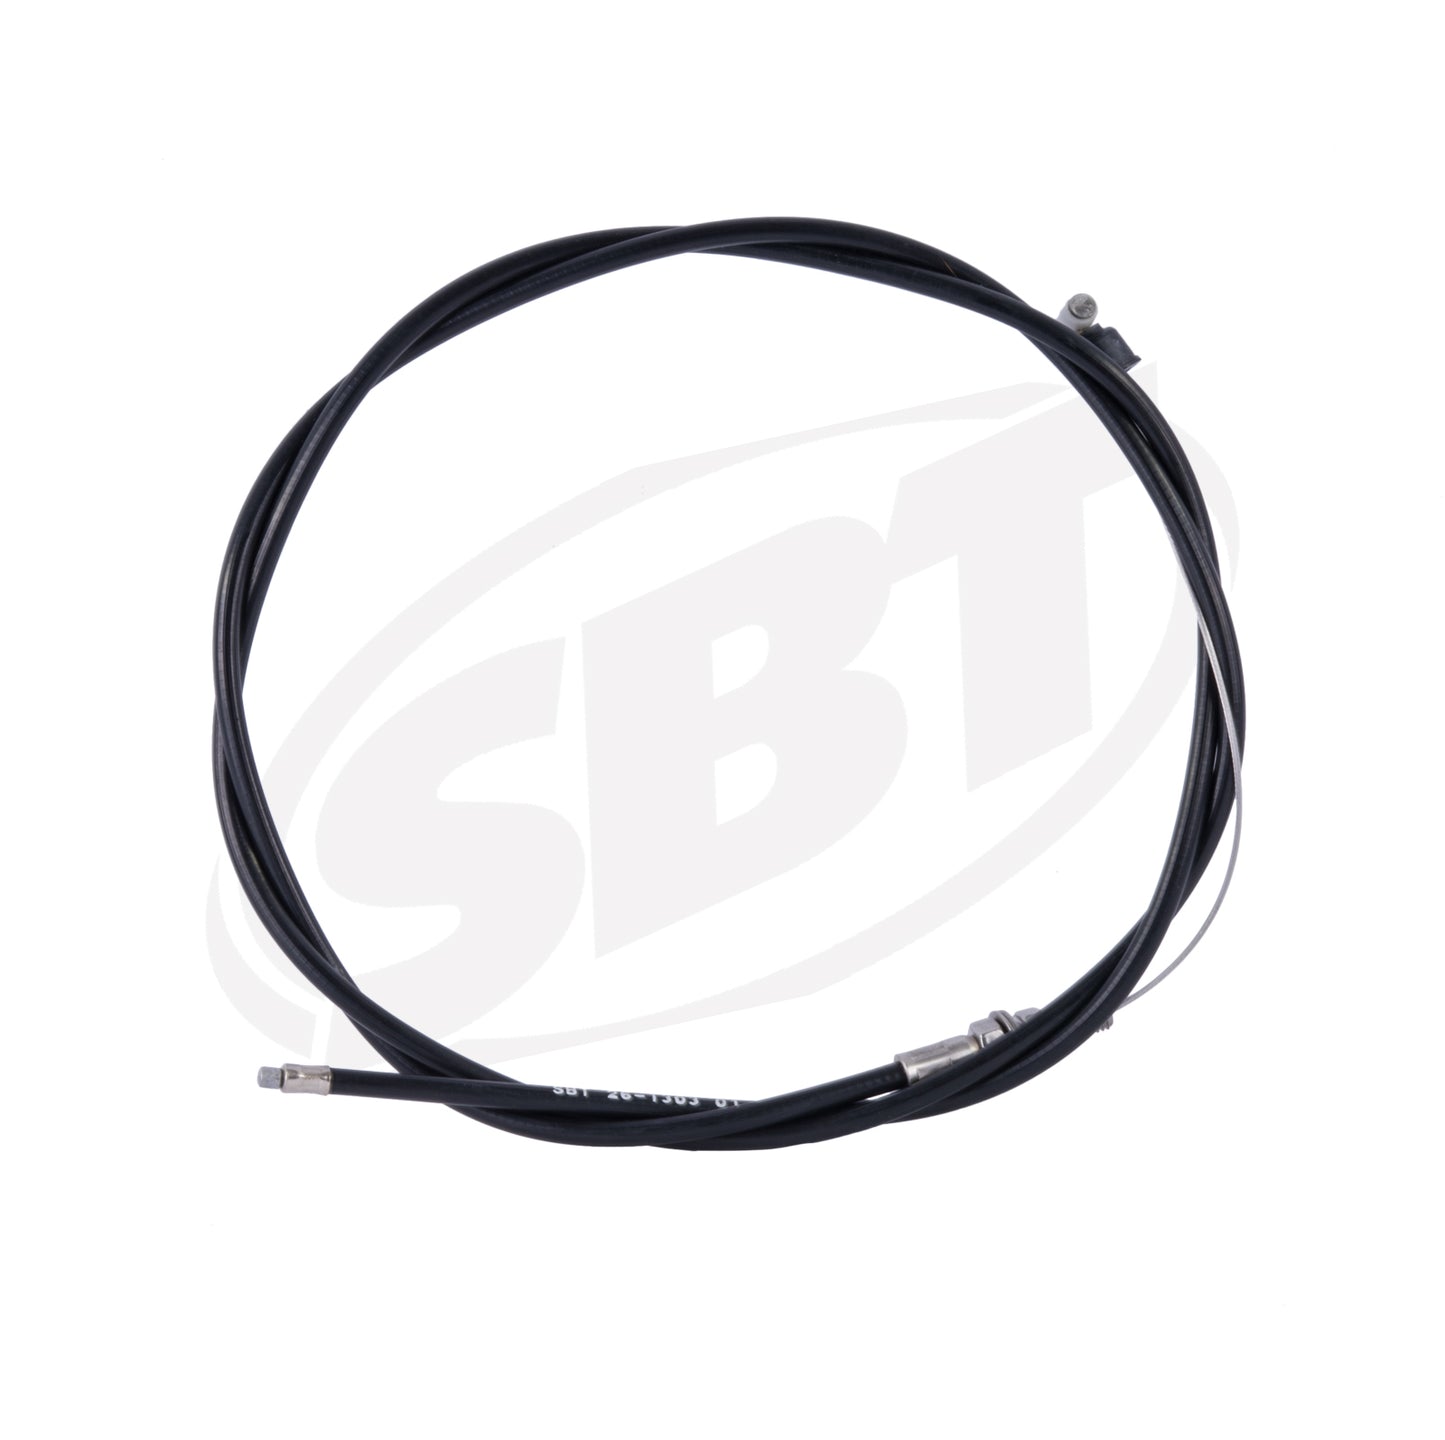 SBT Polaris Choke Cable SL 1050 /900 7080671 1997 ( PRE ORDER )